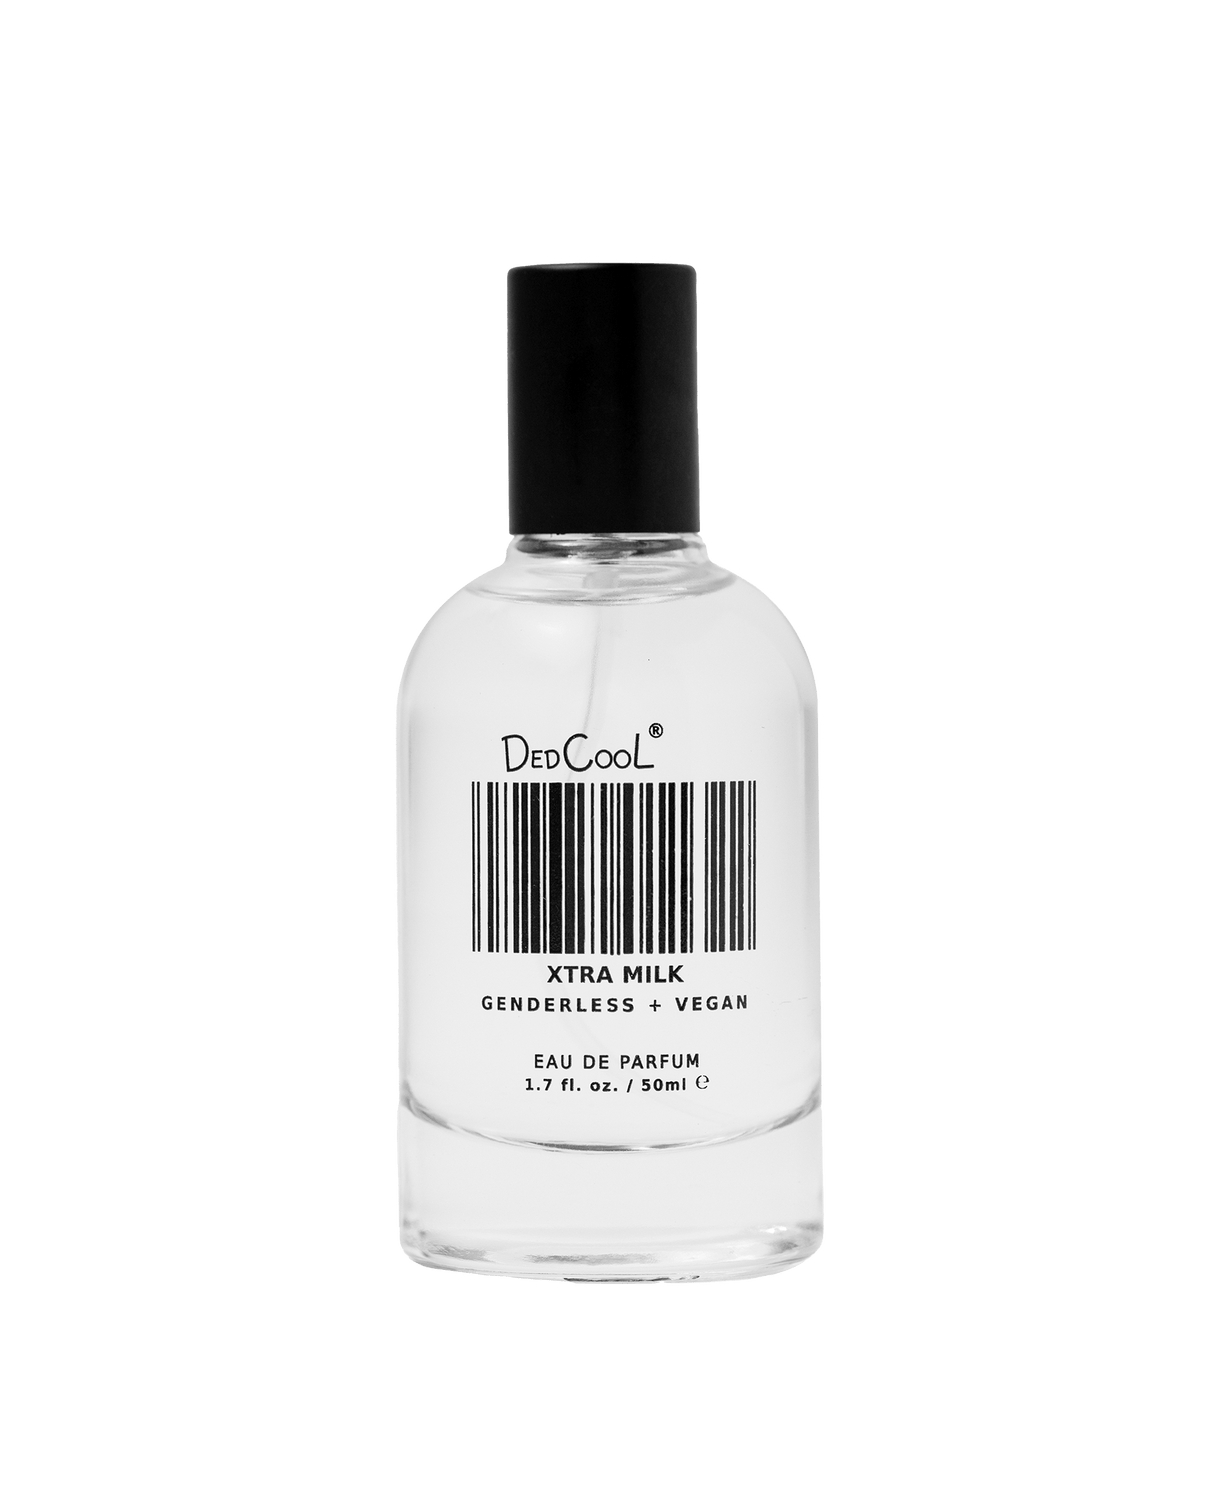 DedCool Perfume & Cologne Xtra Milk Fragrance sunja link - canada